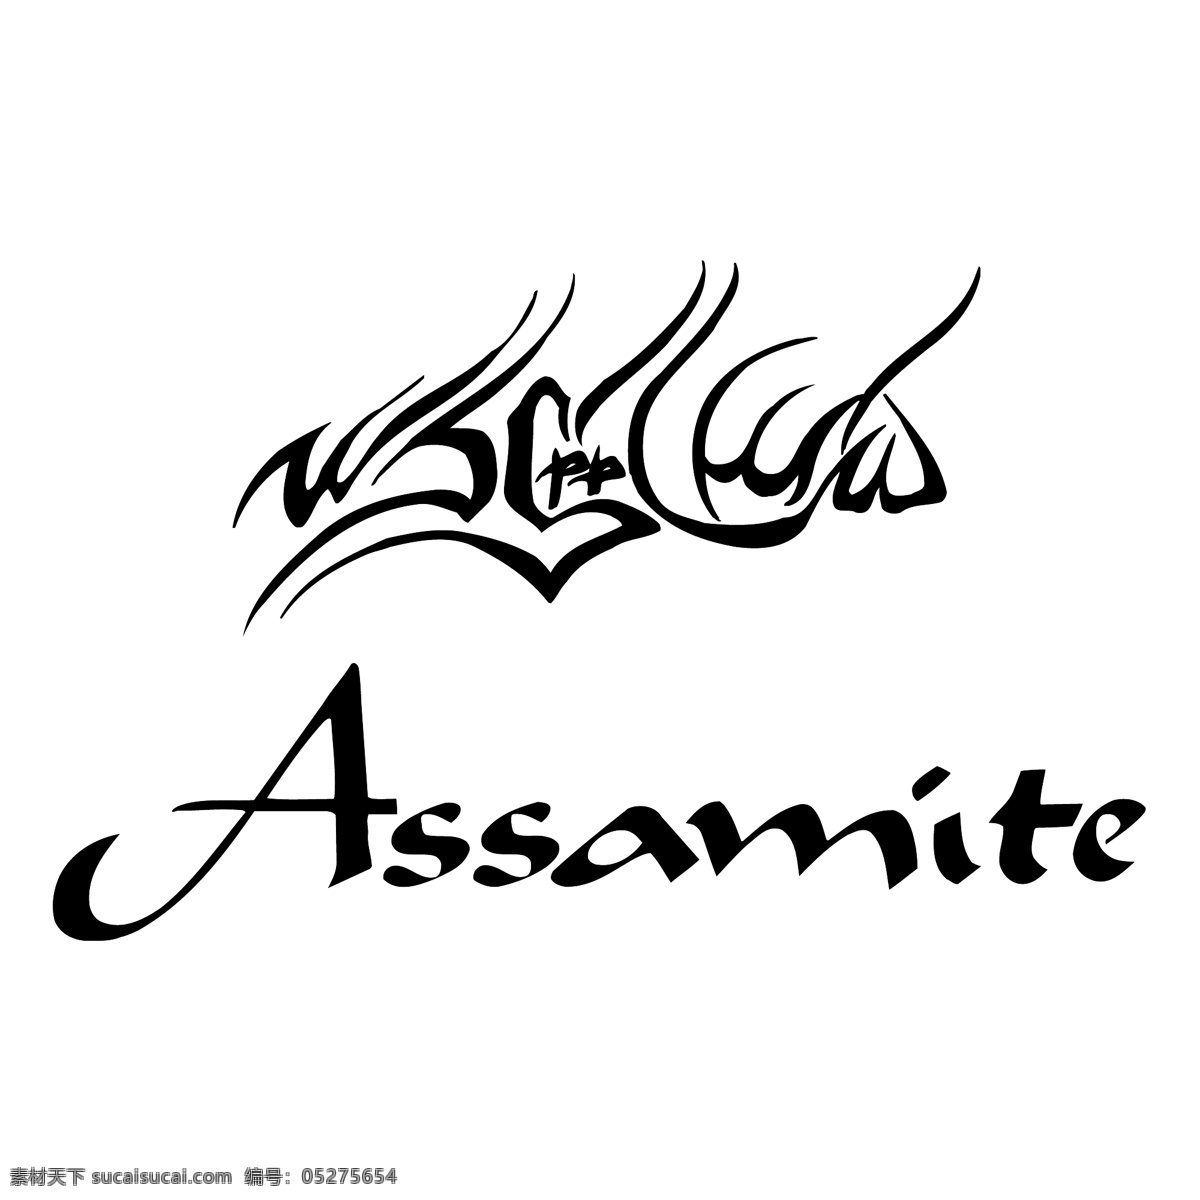 assimite 家族 自由 氏族 标志 免费 psd源文件 logo设计